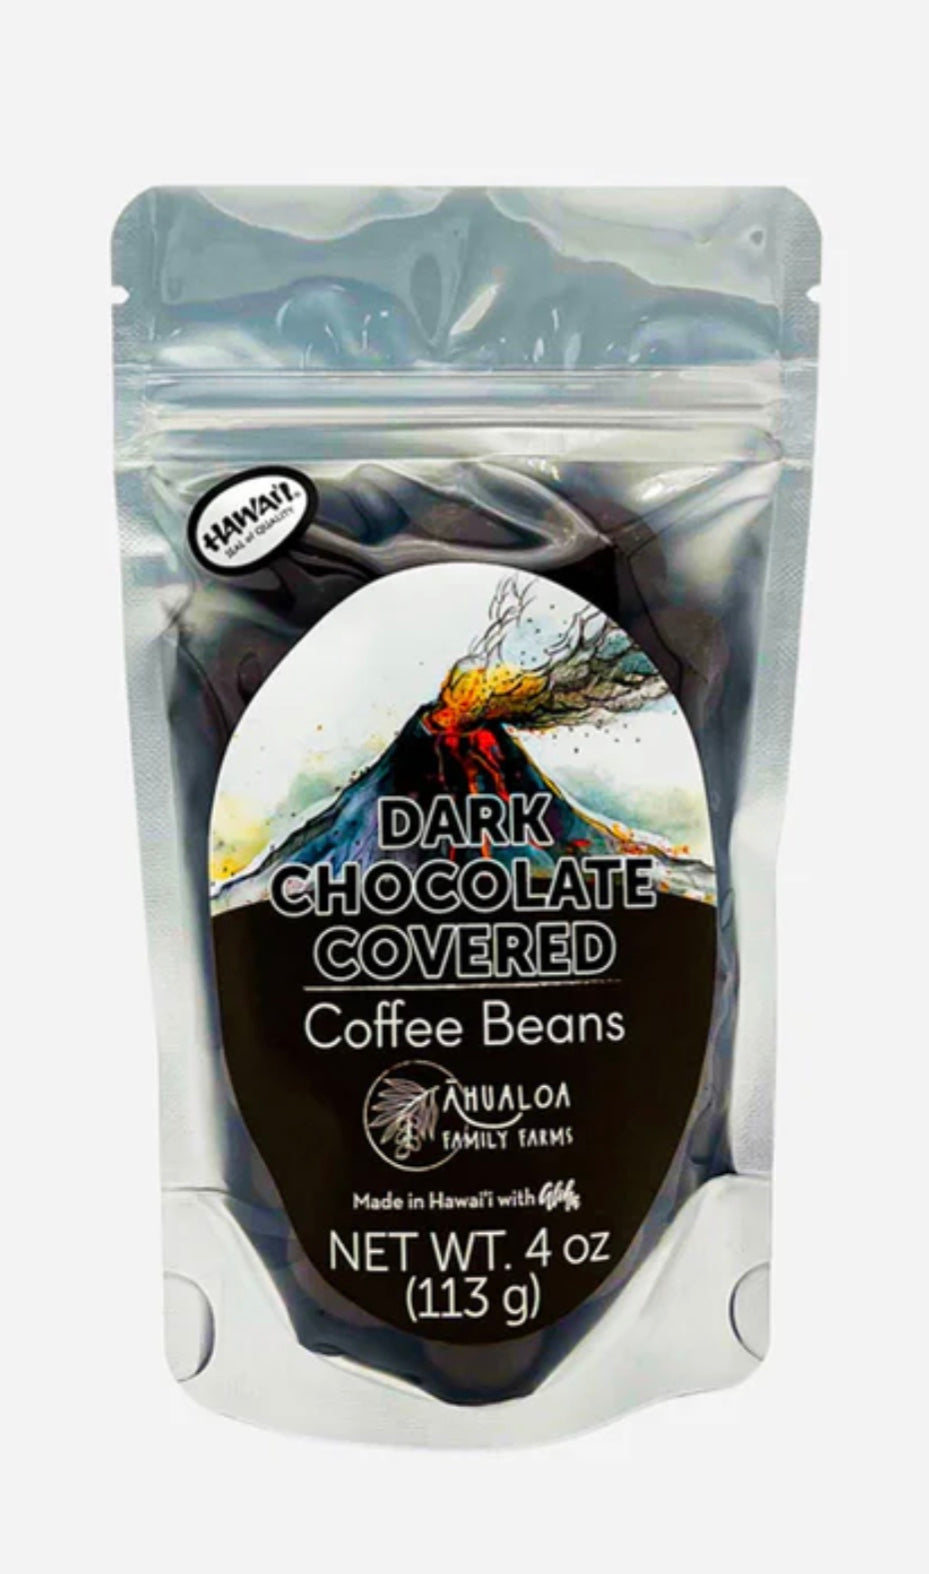 4 oz bag of dark chocolate covered coffee beans